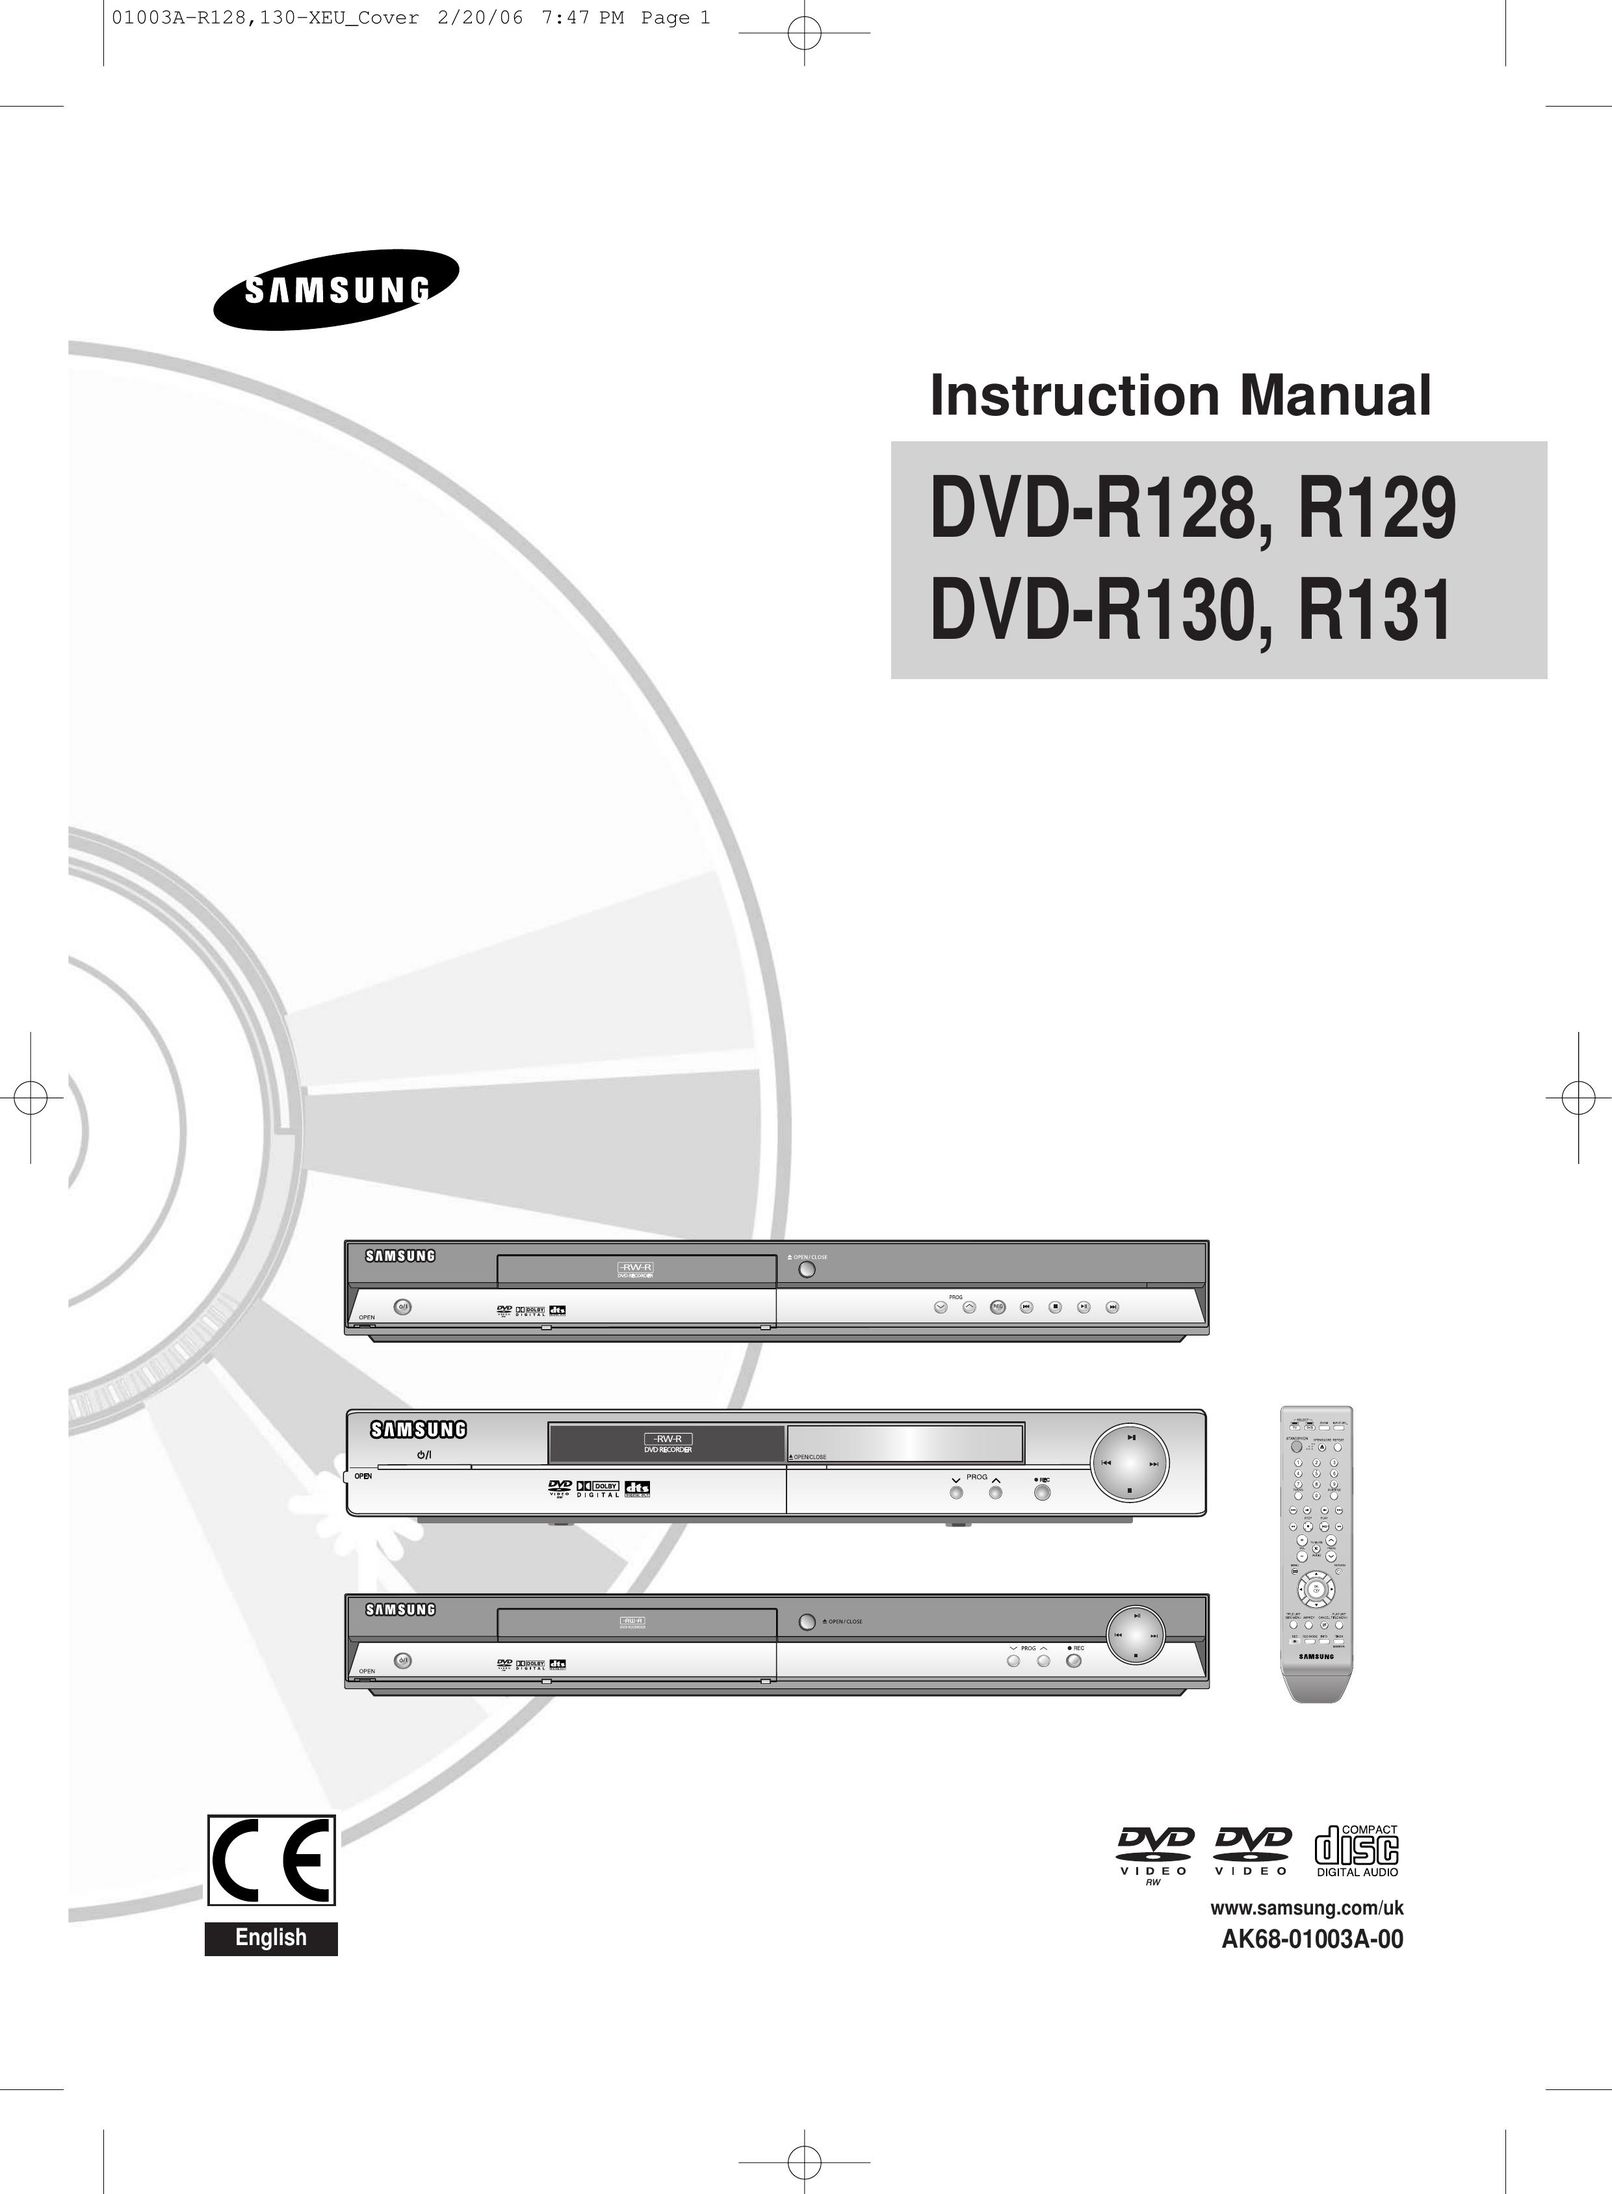 Samsung DVD-R128/X DVD Recorder User Manual